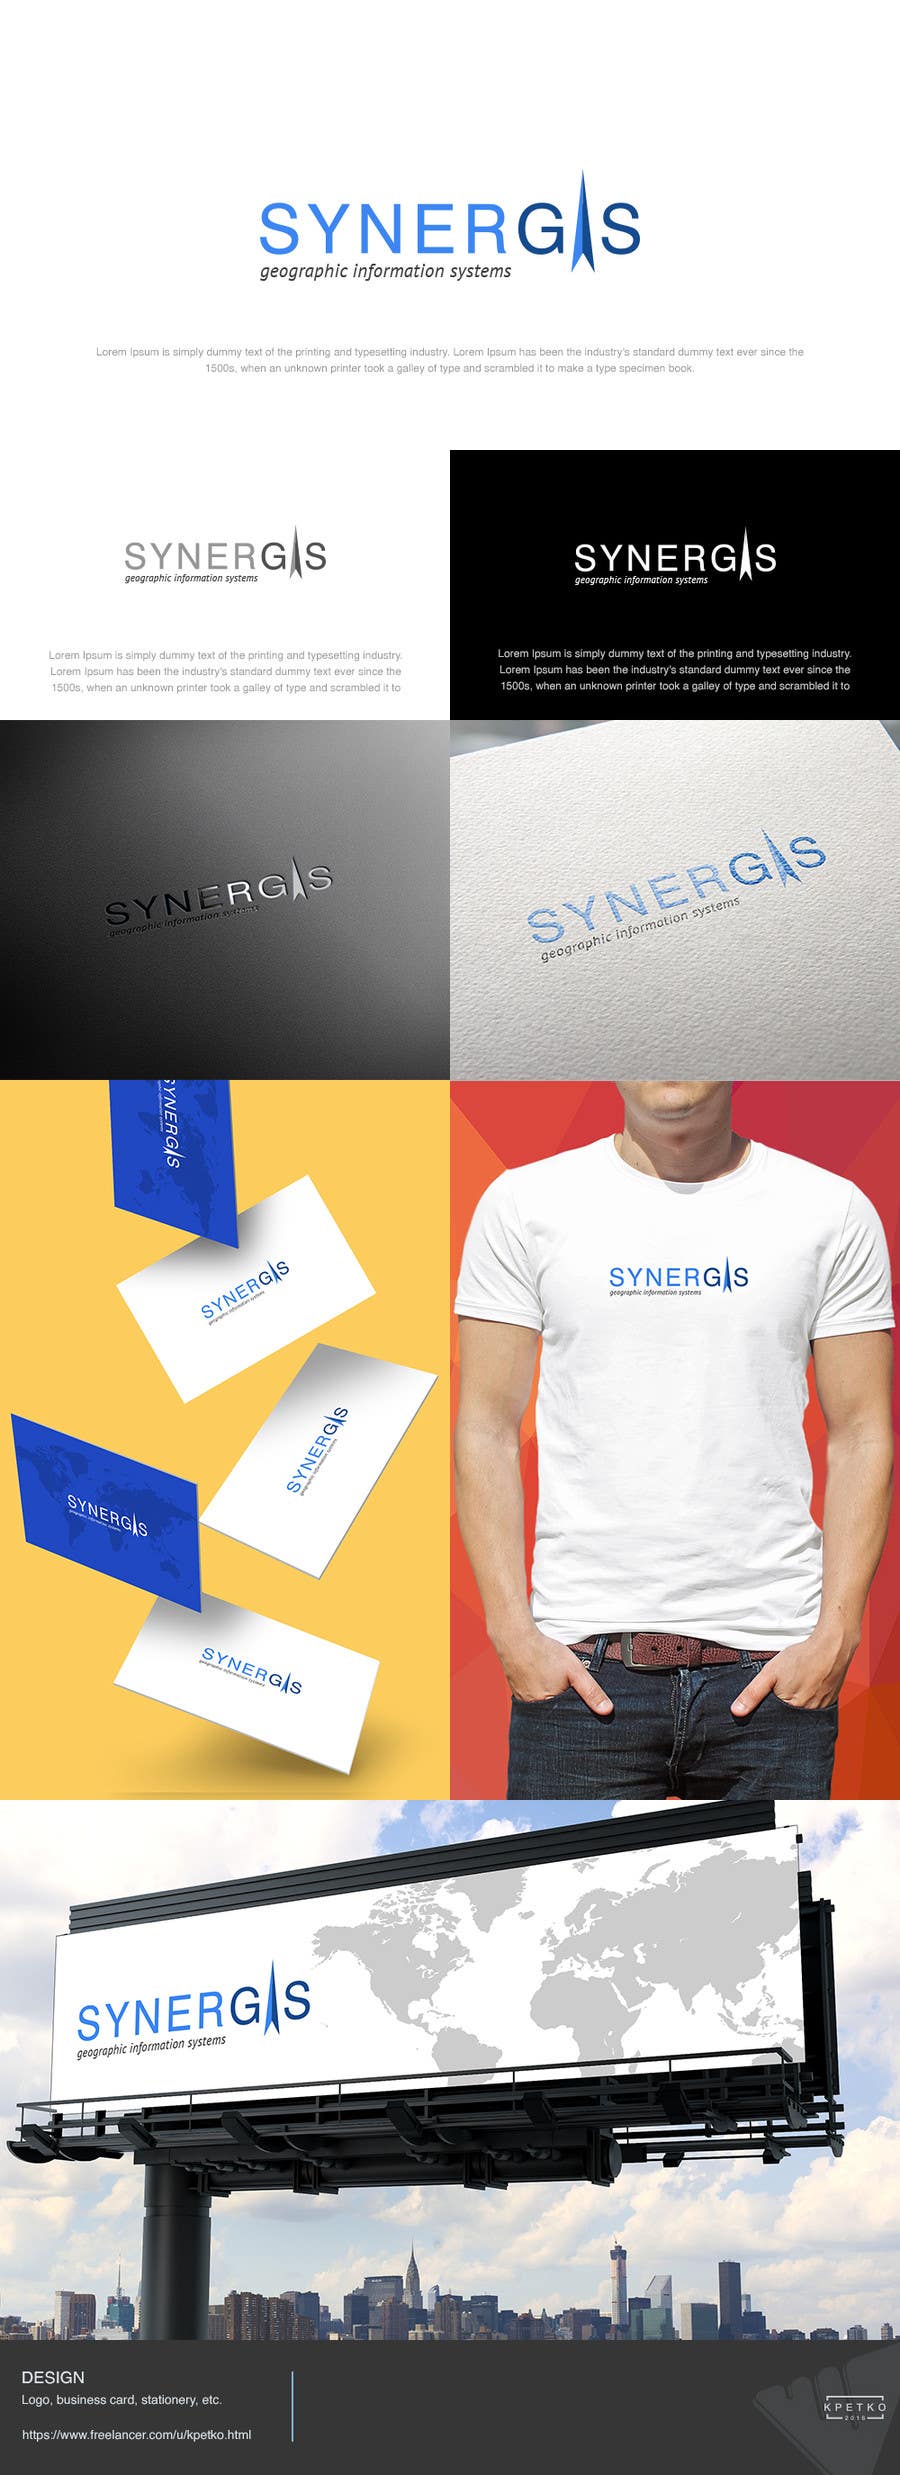 Contest Entry #7 for                                                 Design a logo for SynerGIS
                                            